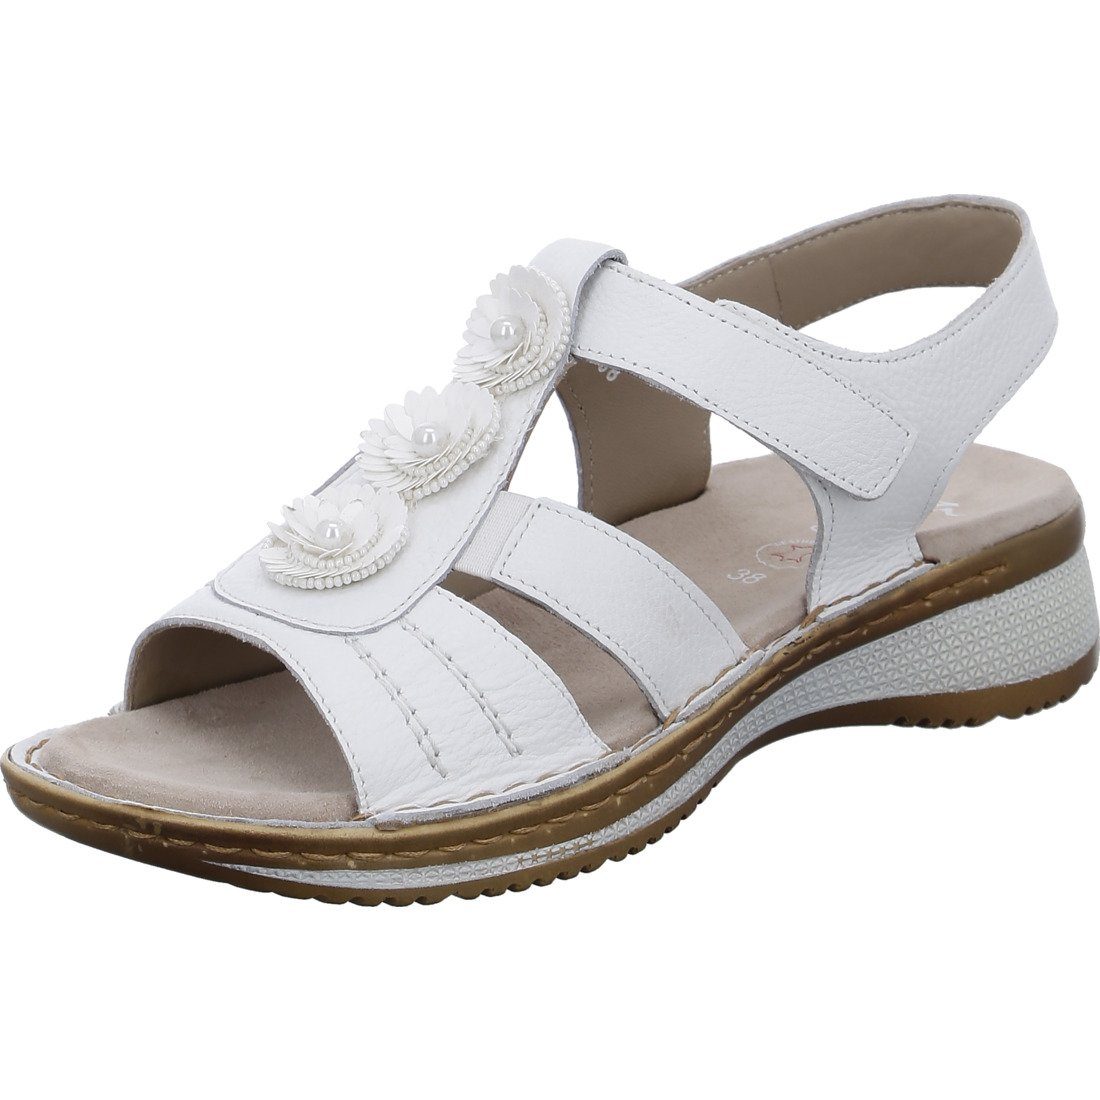 Ara Ara Schuhe, Sandalette Hawaii - Glattleder Sandalette weiß 048063